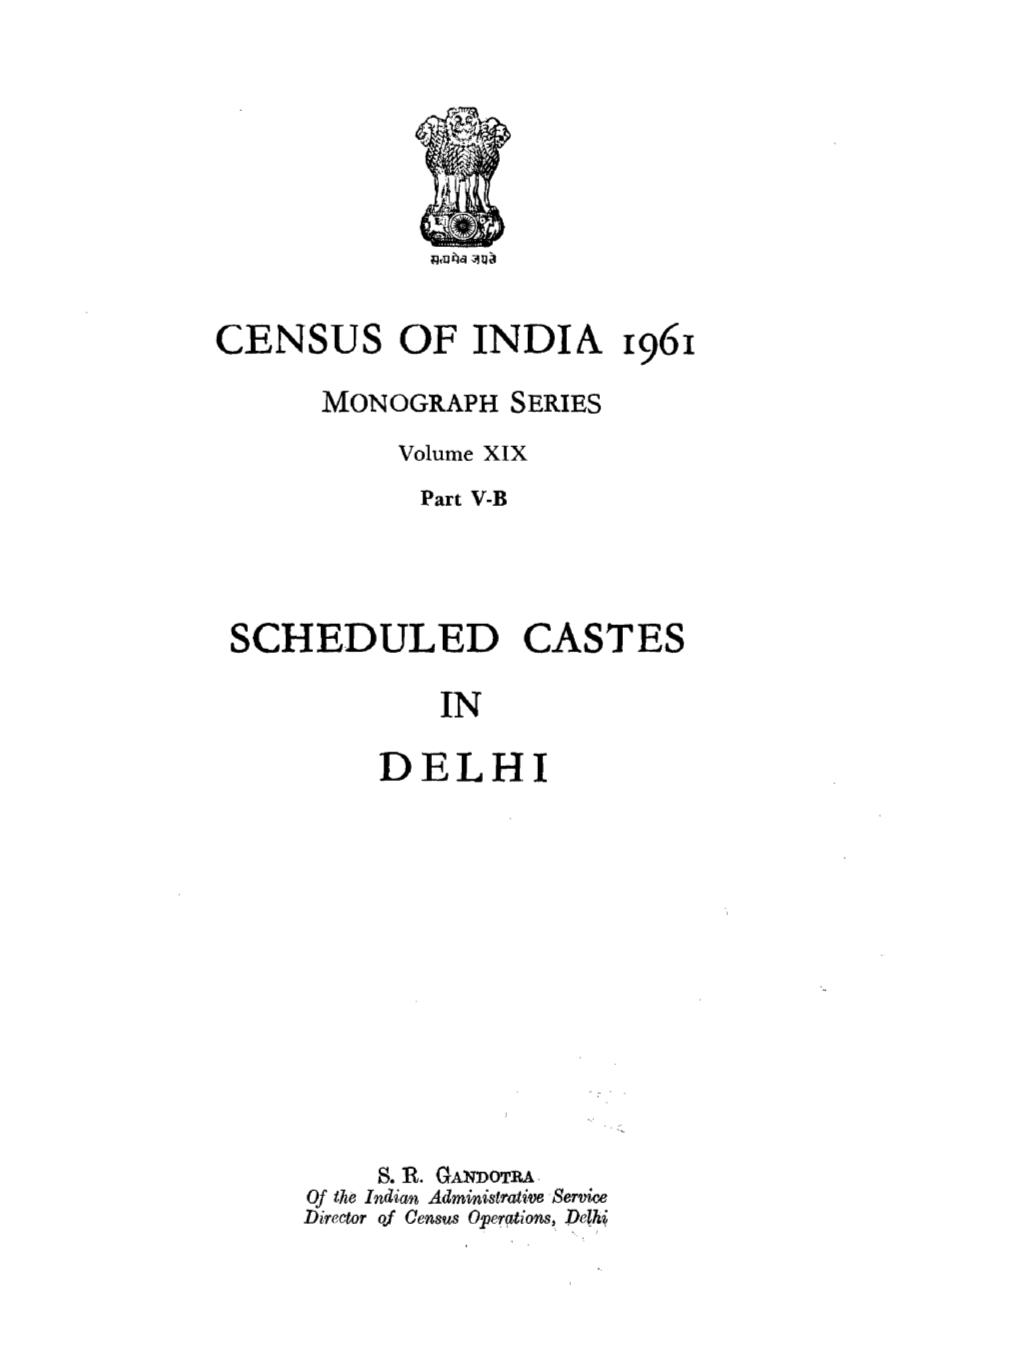 Scheduled Castes in Delhi, Monograph Series, Part V-B, Vol